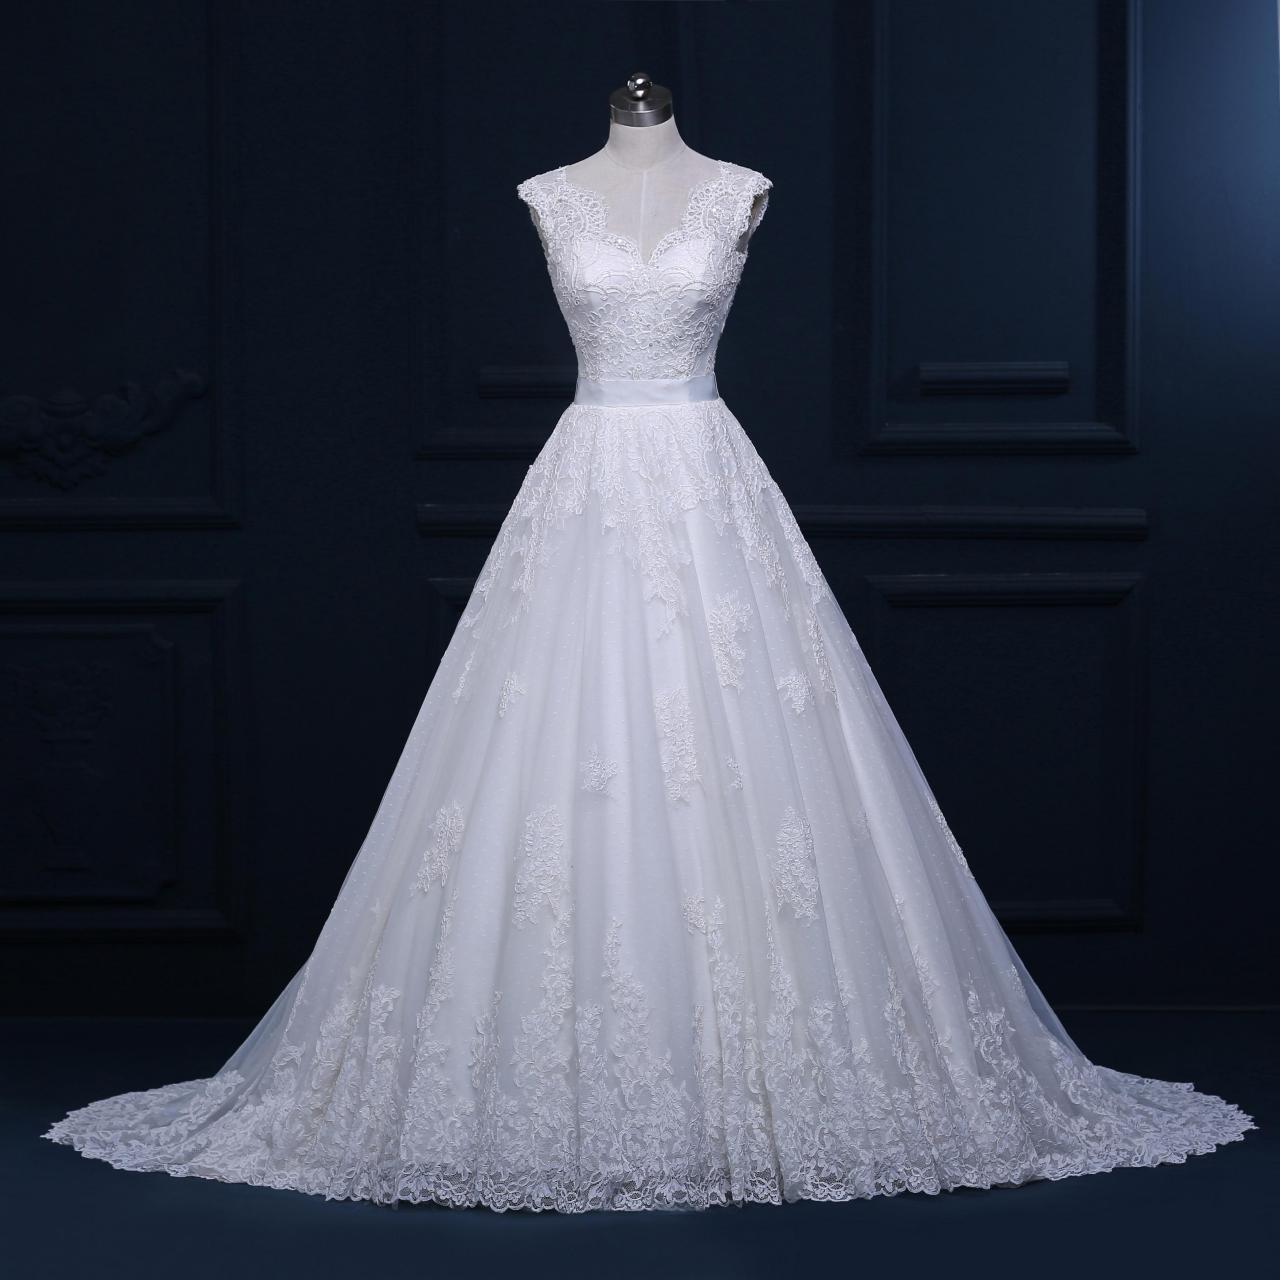 Lace Wedding Dress, 2016 Wedding Dresses, Wedding Ball Gown, Chapel Train Wedding Dress, Wedding Gown, V Neck Wedding Dress, White Wedding